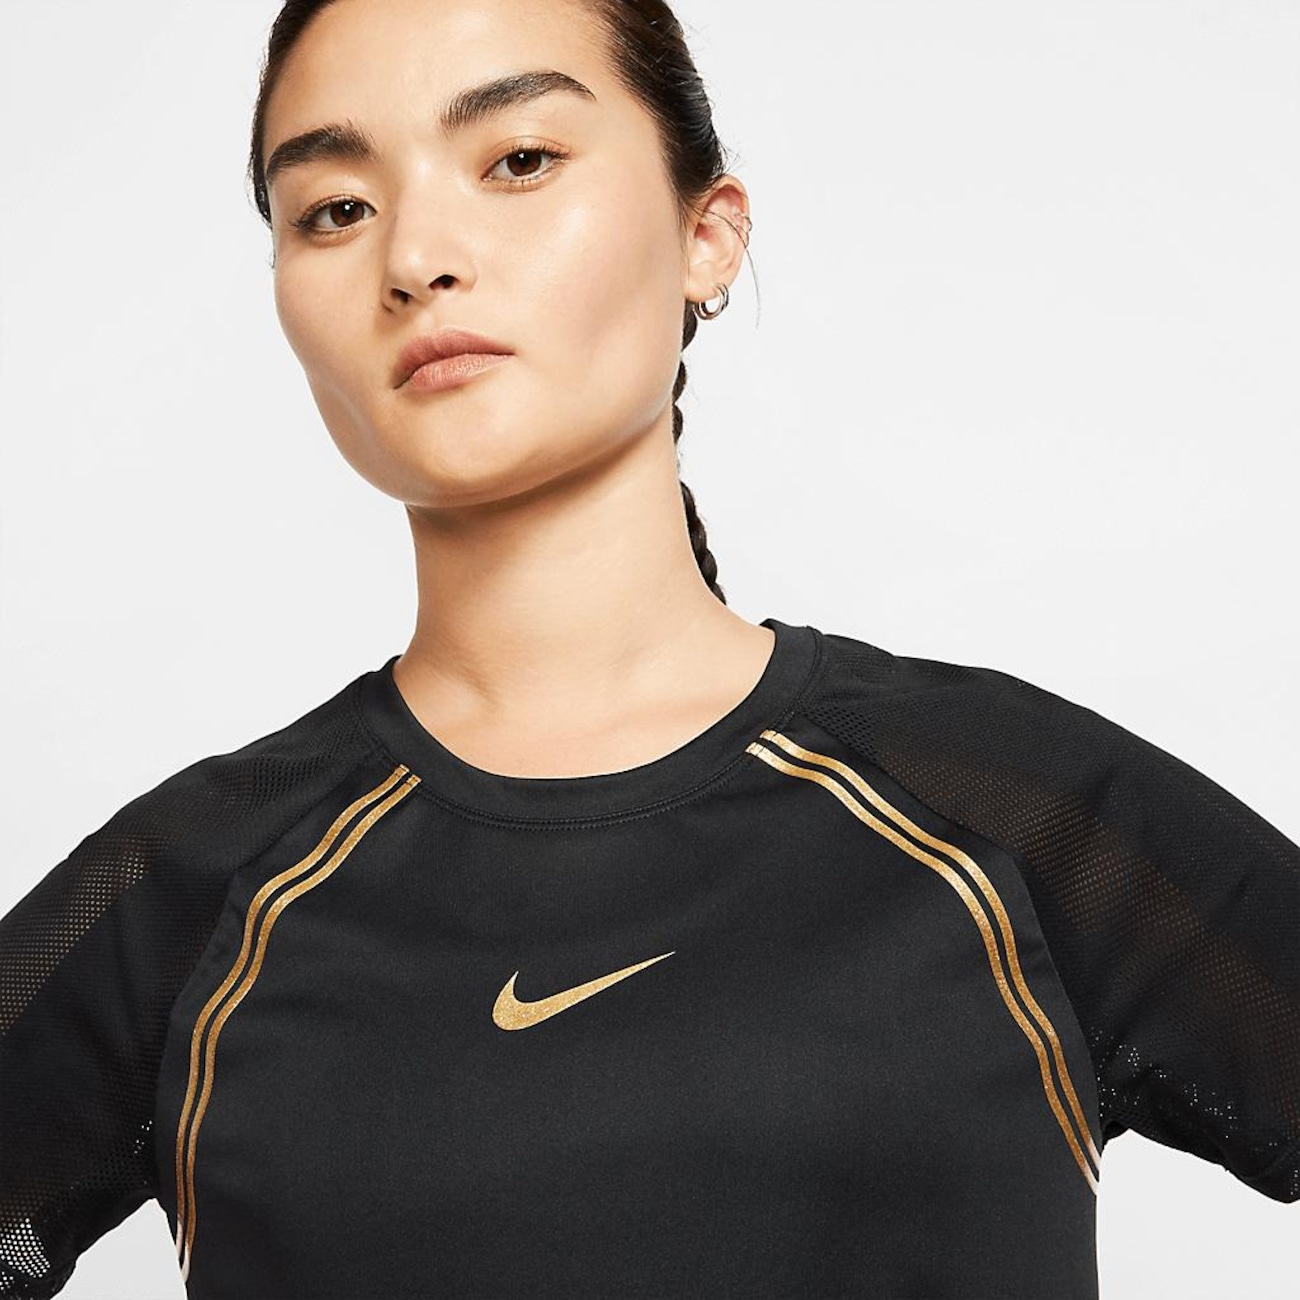 Camiseta Nike Feminina - Foto 4